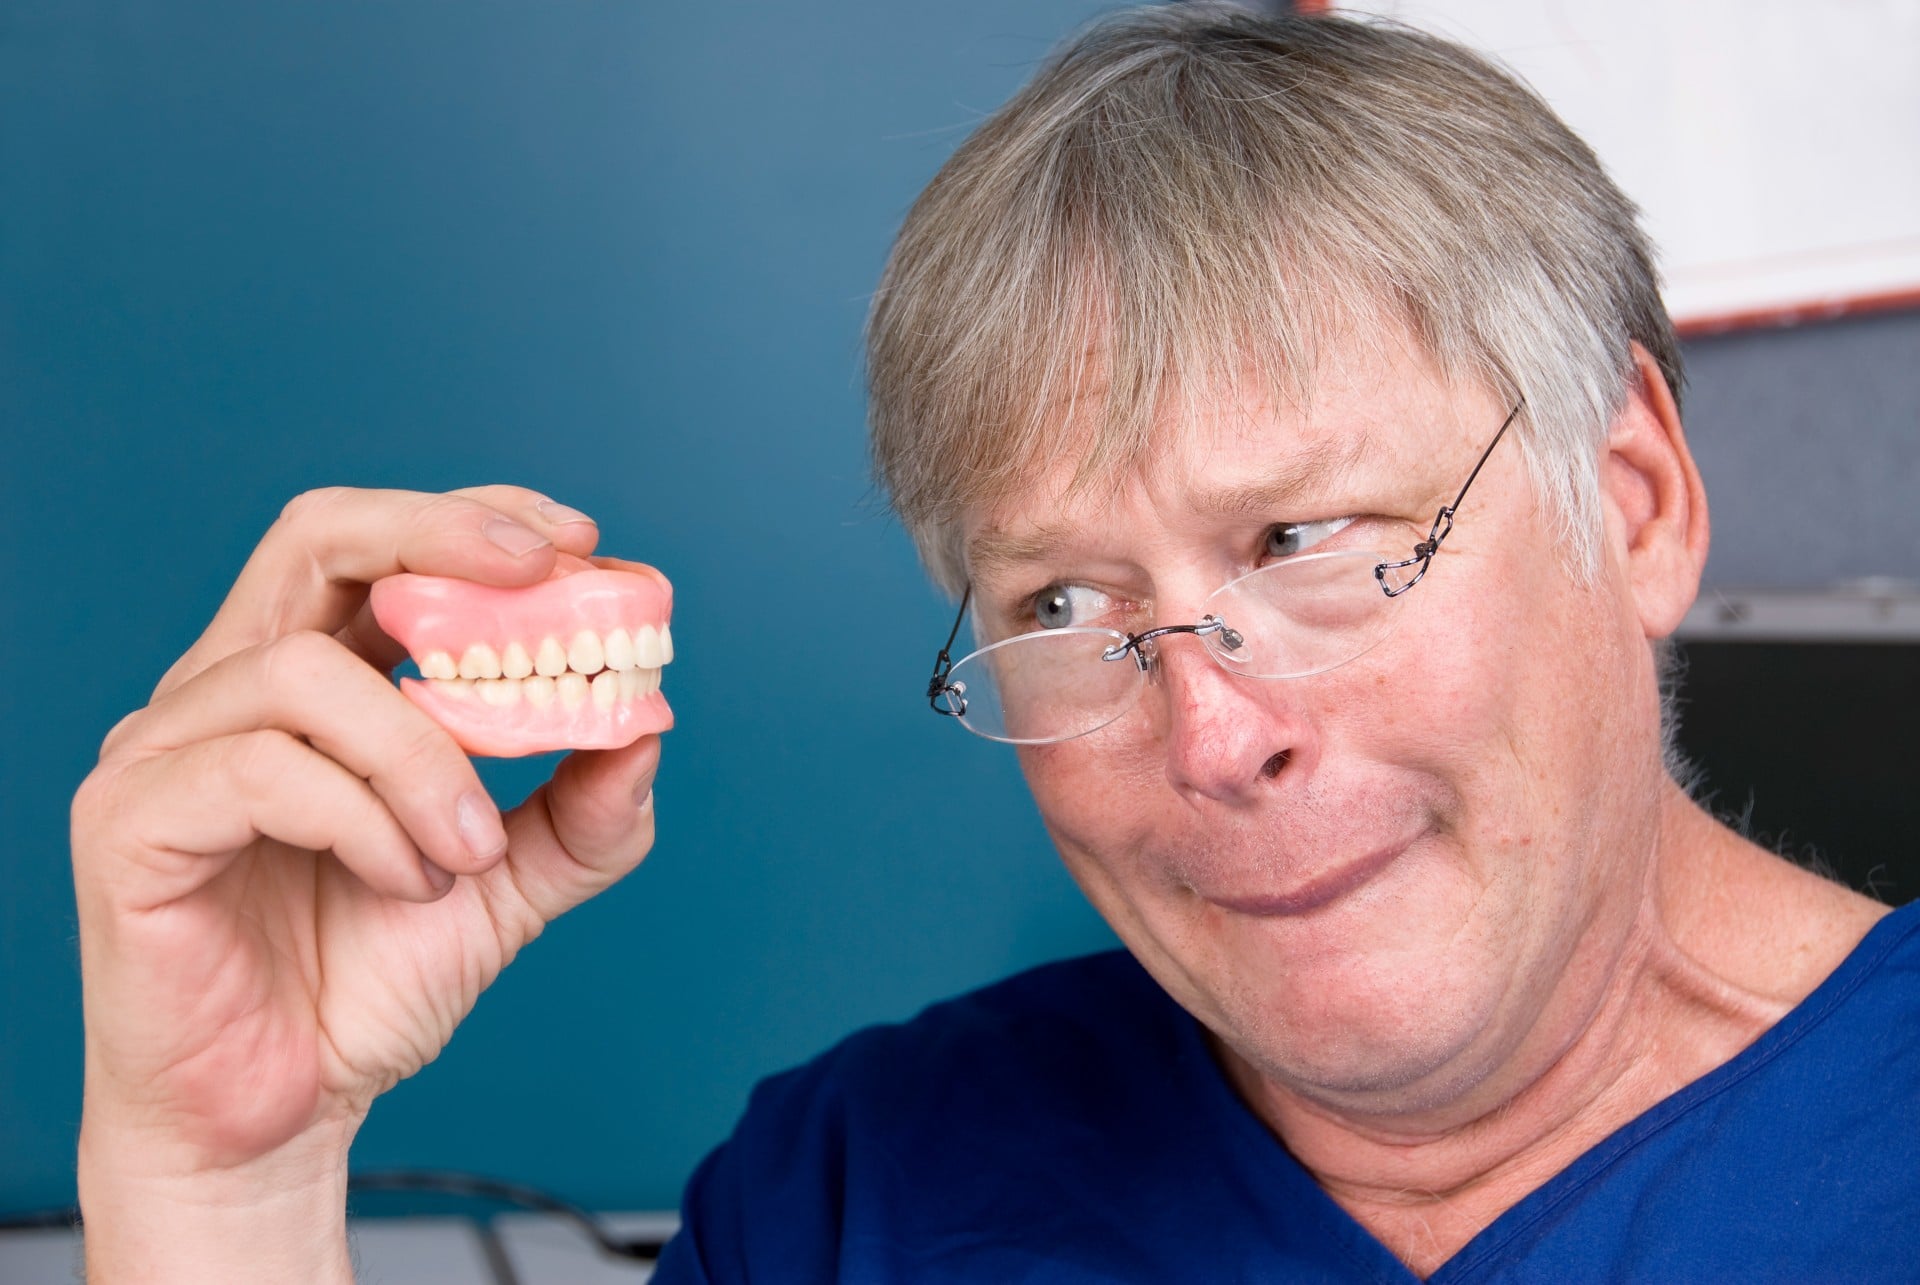 Dentadura Postiza Vs Implantes Ventajas Y Desventajas